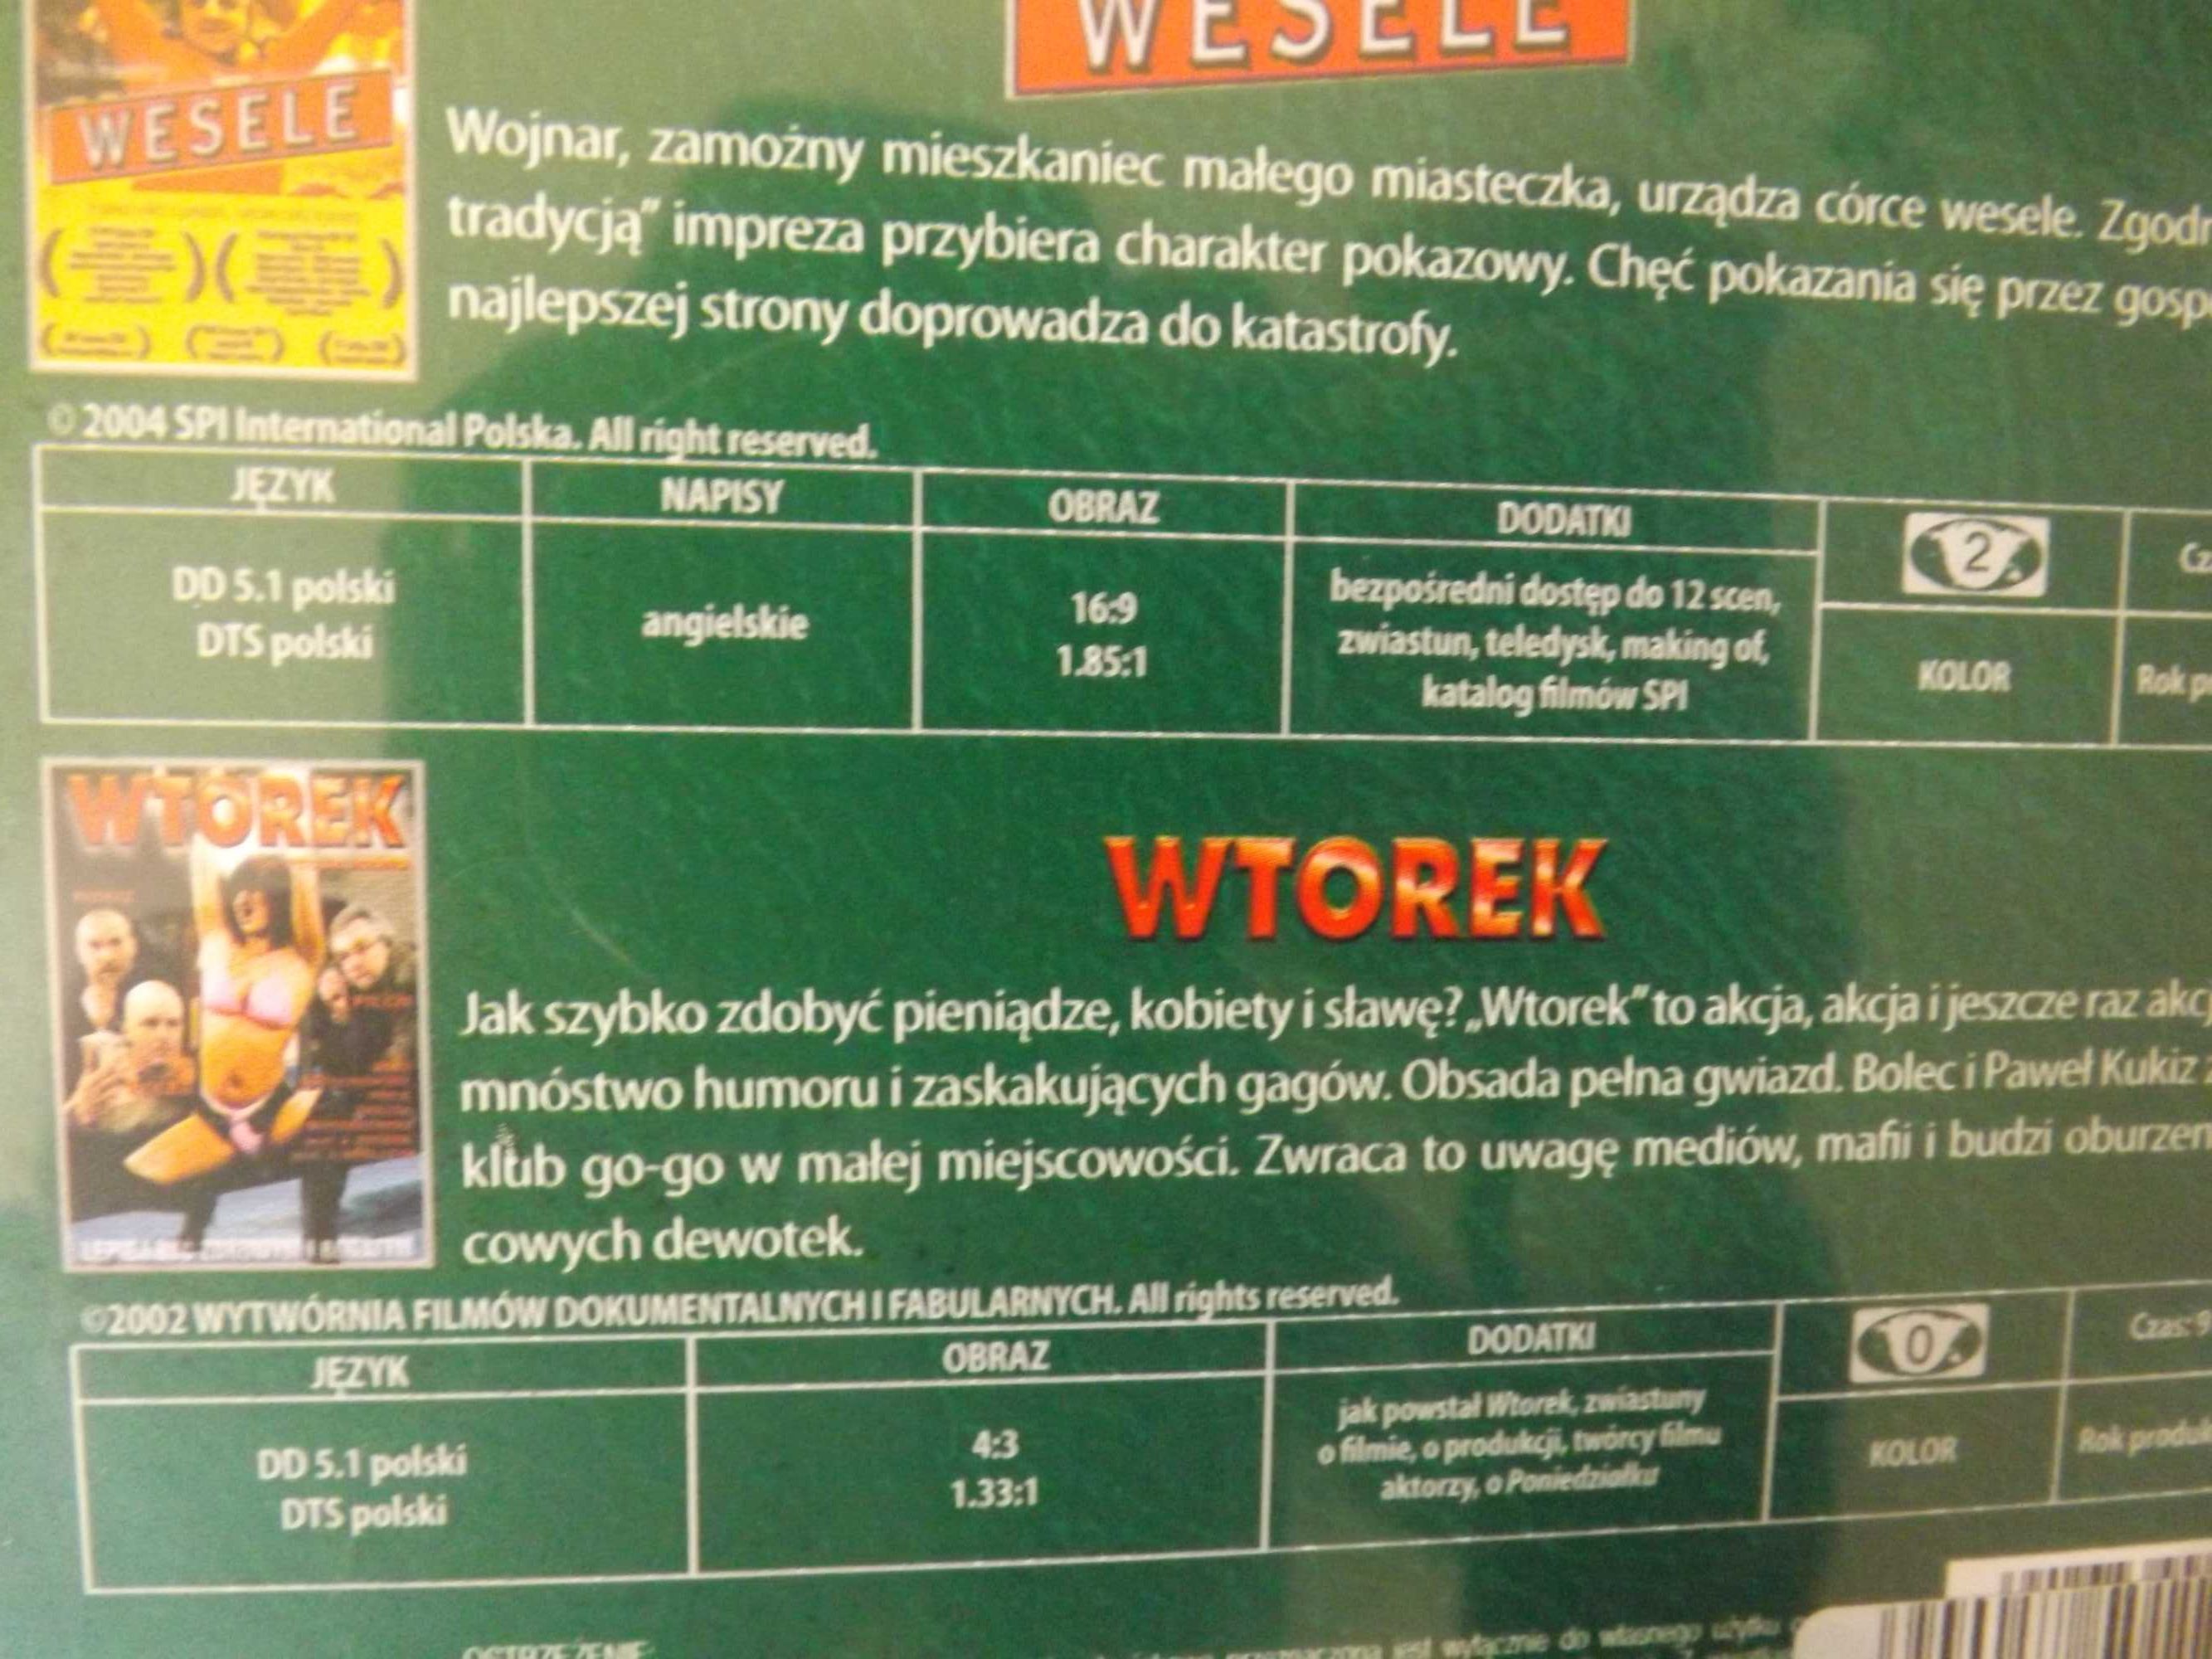 Wesele- Smarzowski- Cialo - Wtorek- polska komedia dvd